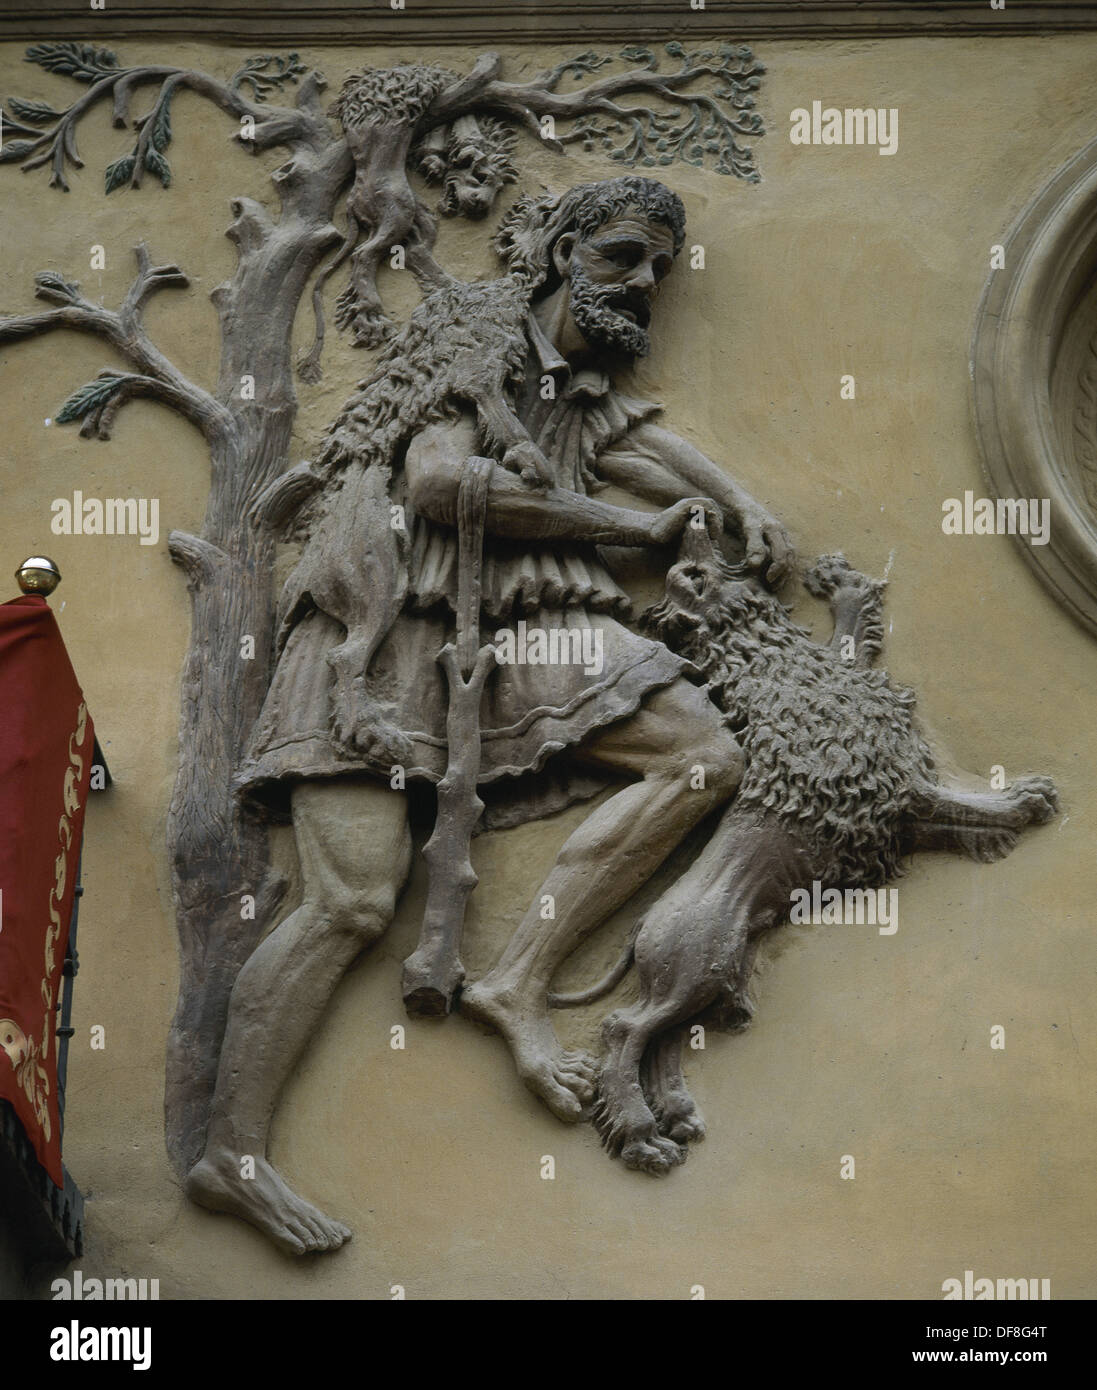 Twelve Labors of Hercules. First labor: kill the Nemean lion and take their skin. City Hall. Tarazona. Aragon. Spain. Stock Photo